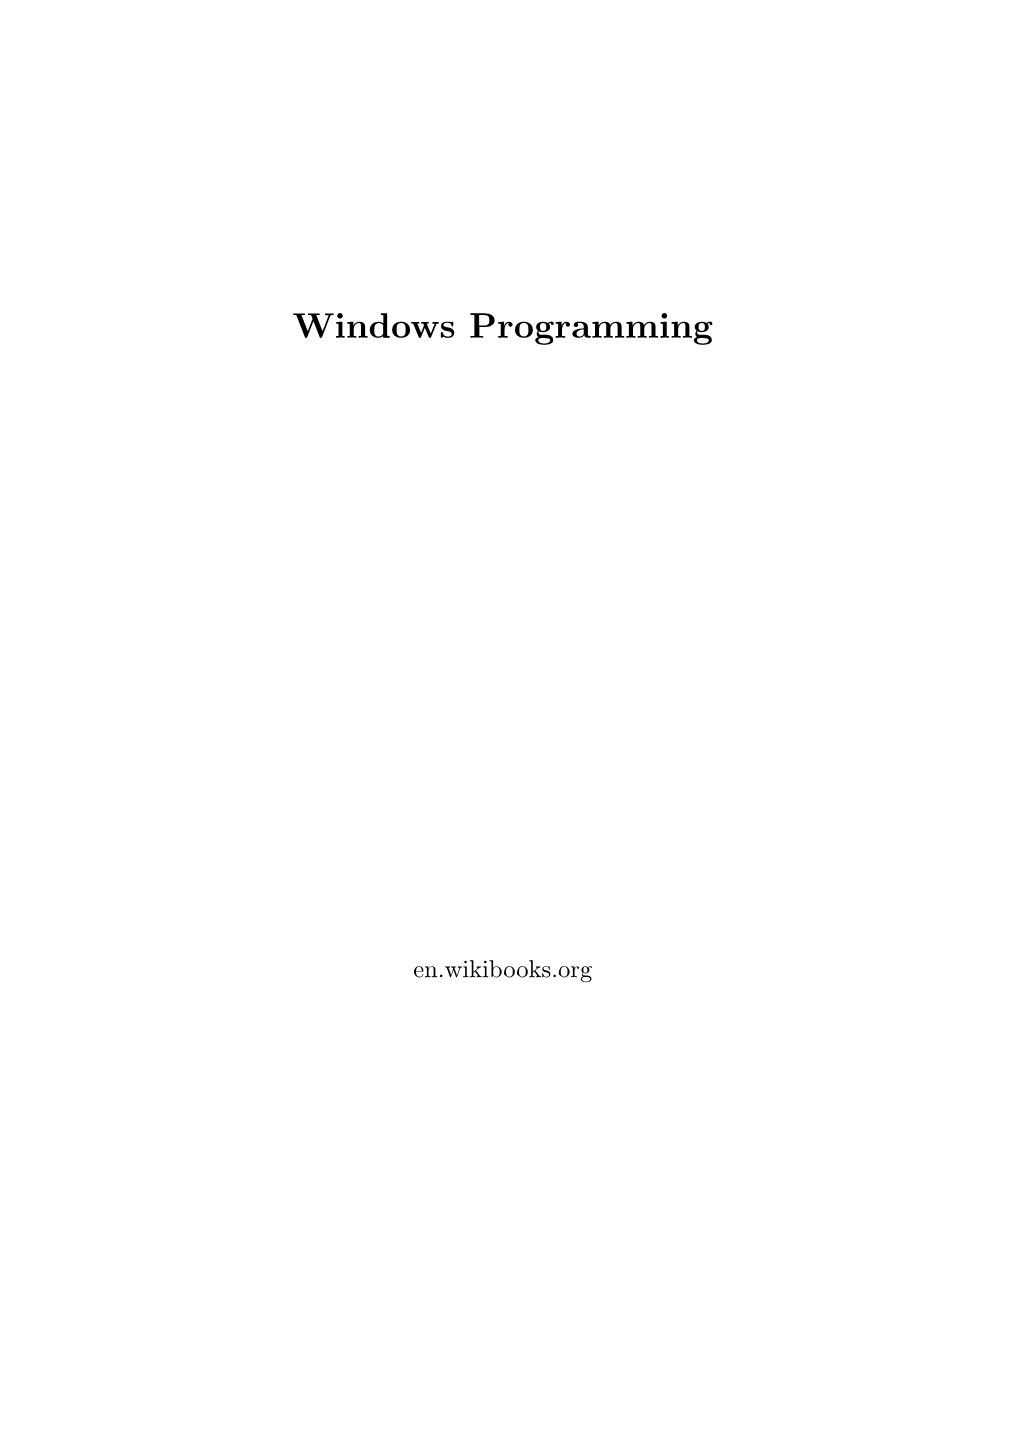 Windows Programming